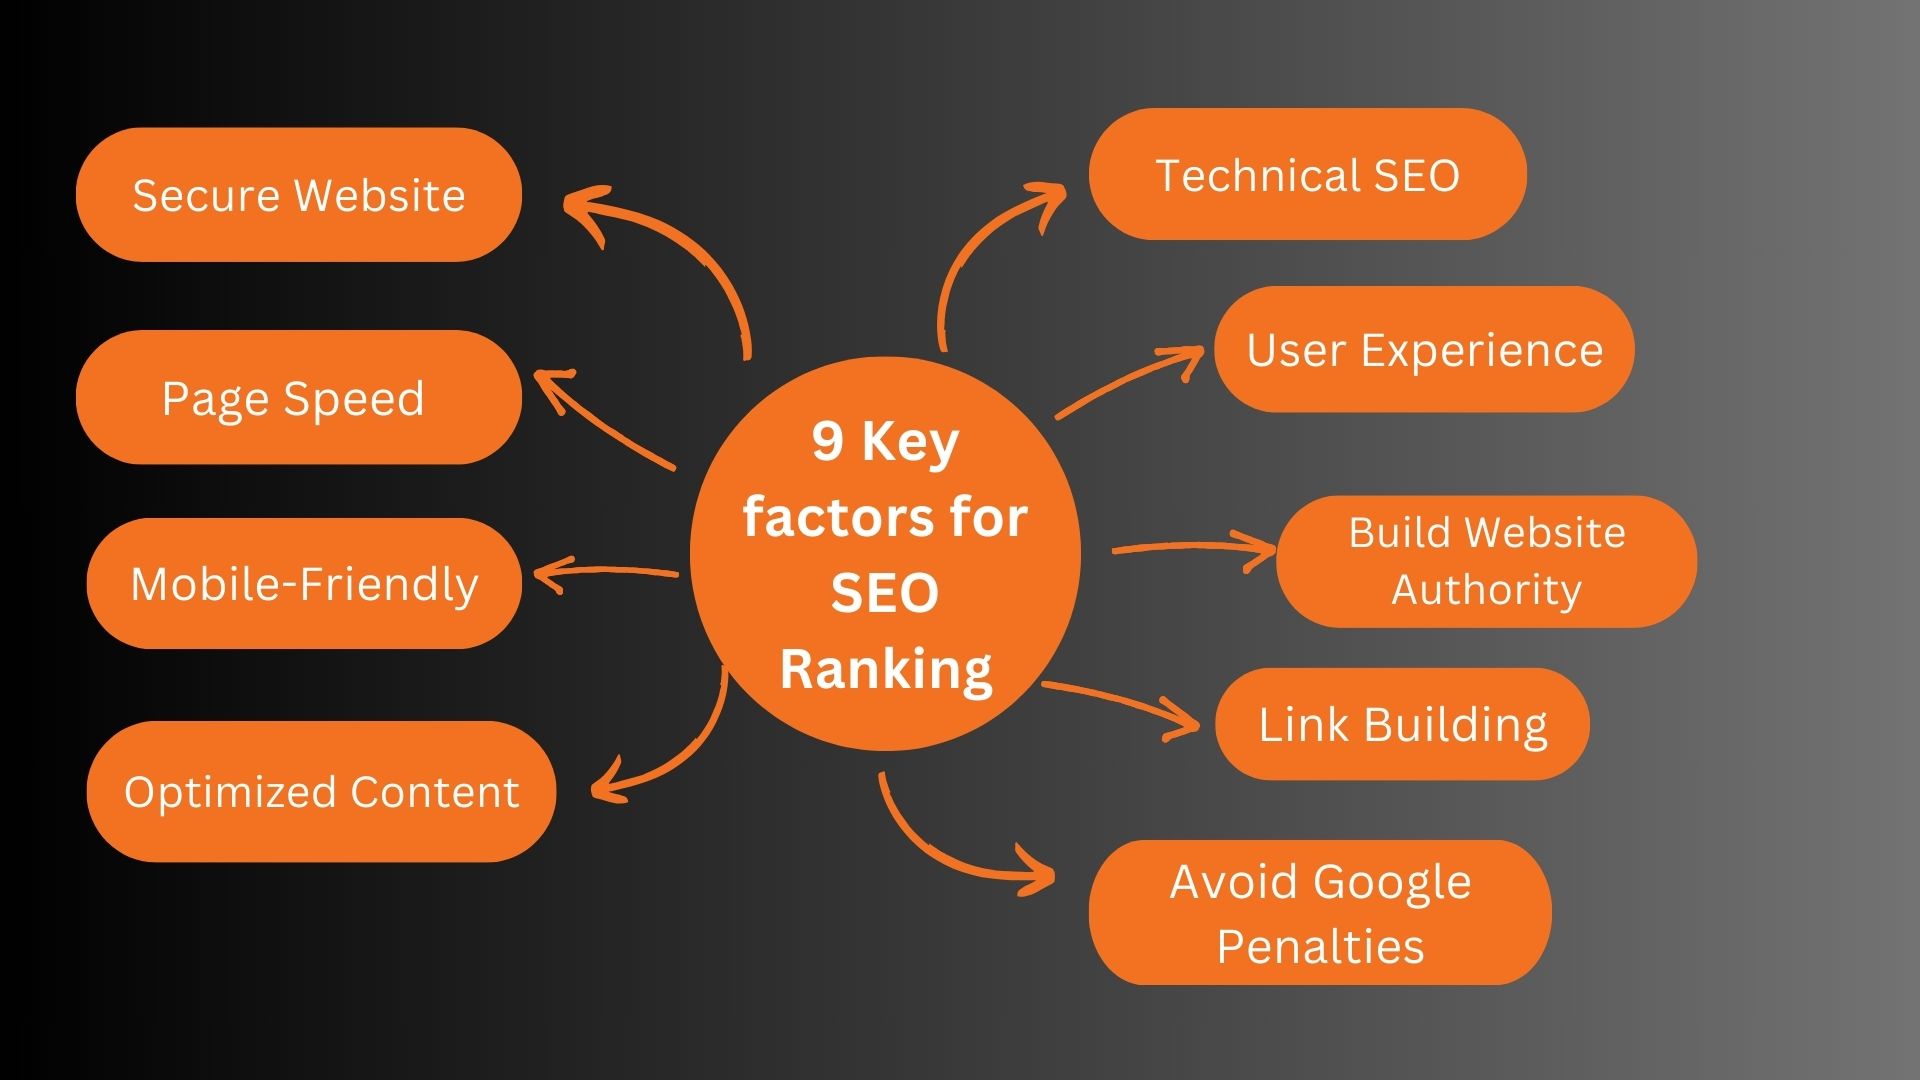 9 Key factors for SEO Ranking